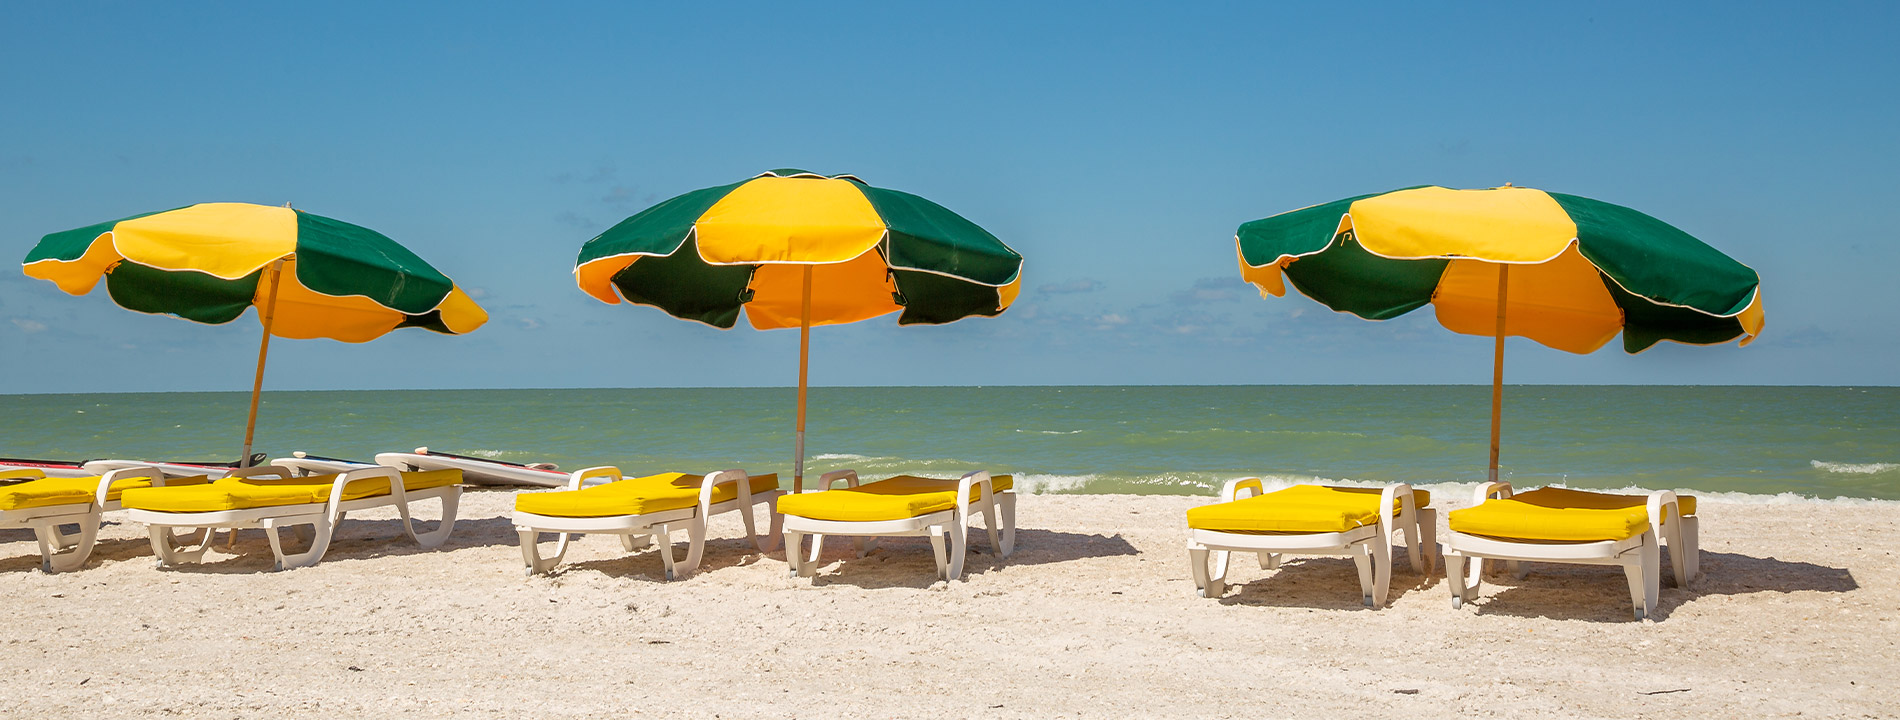 Three beach umbrellas in the sand.